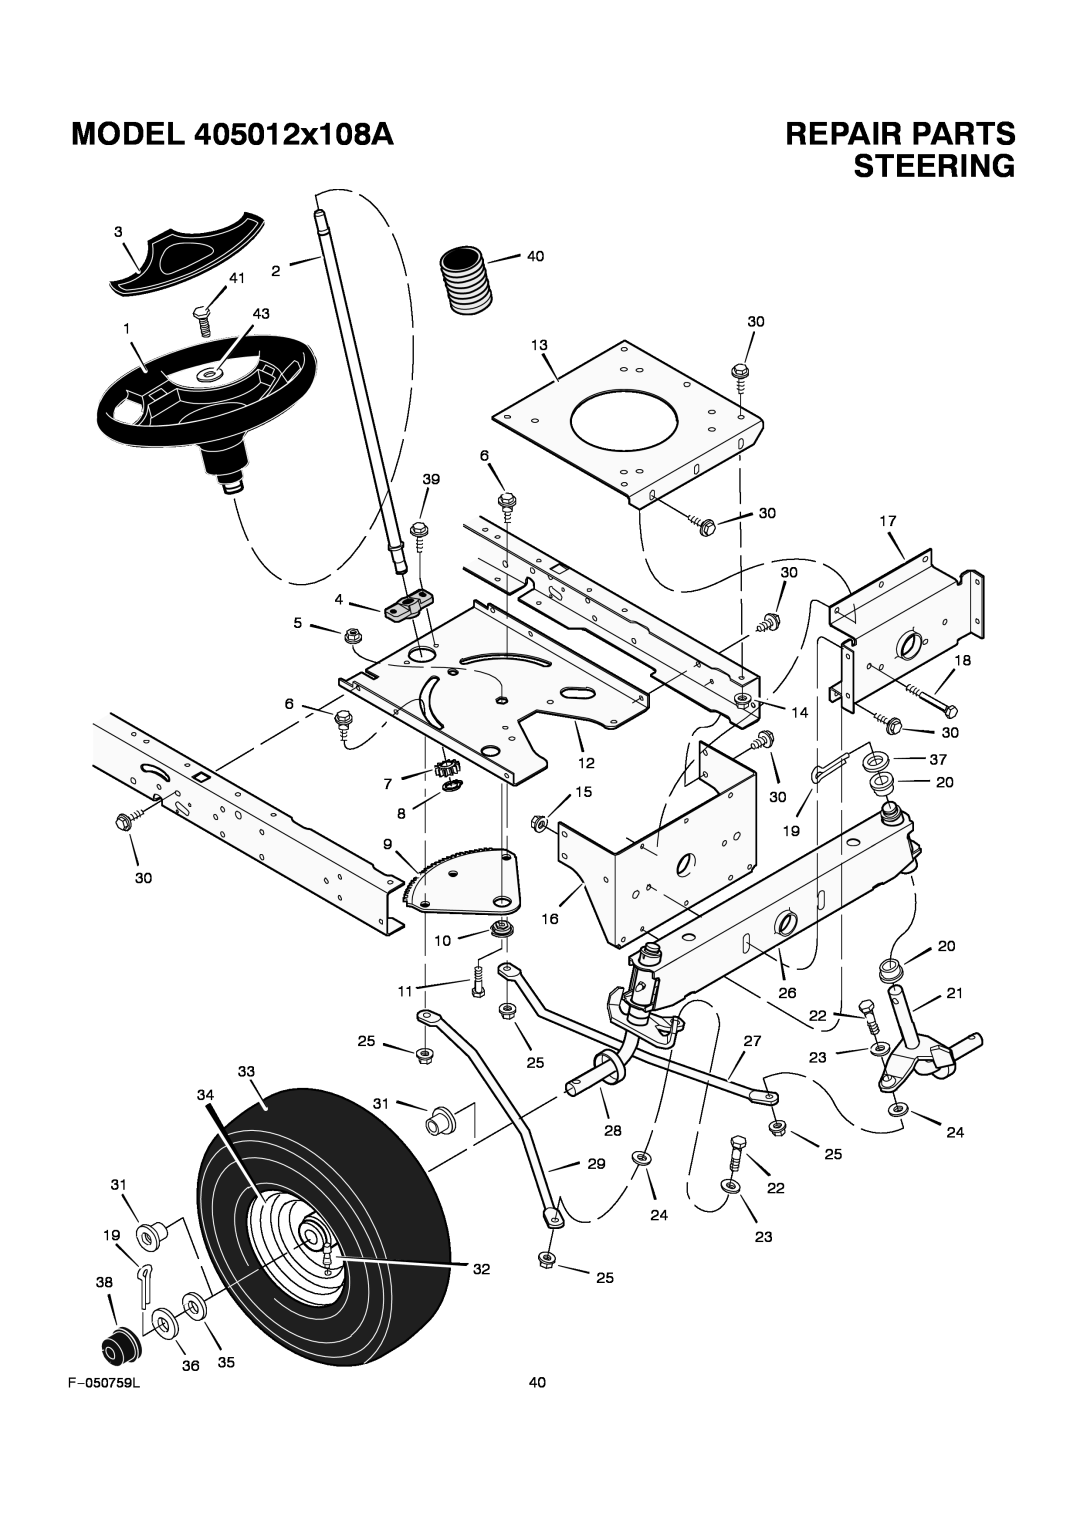 Rover owner manual Repair Parts, Steering, MODEL 405012x108A, F 050759L 